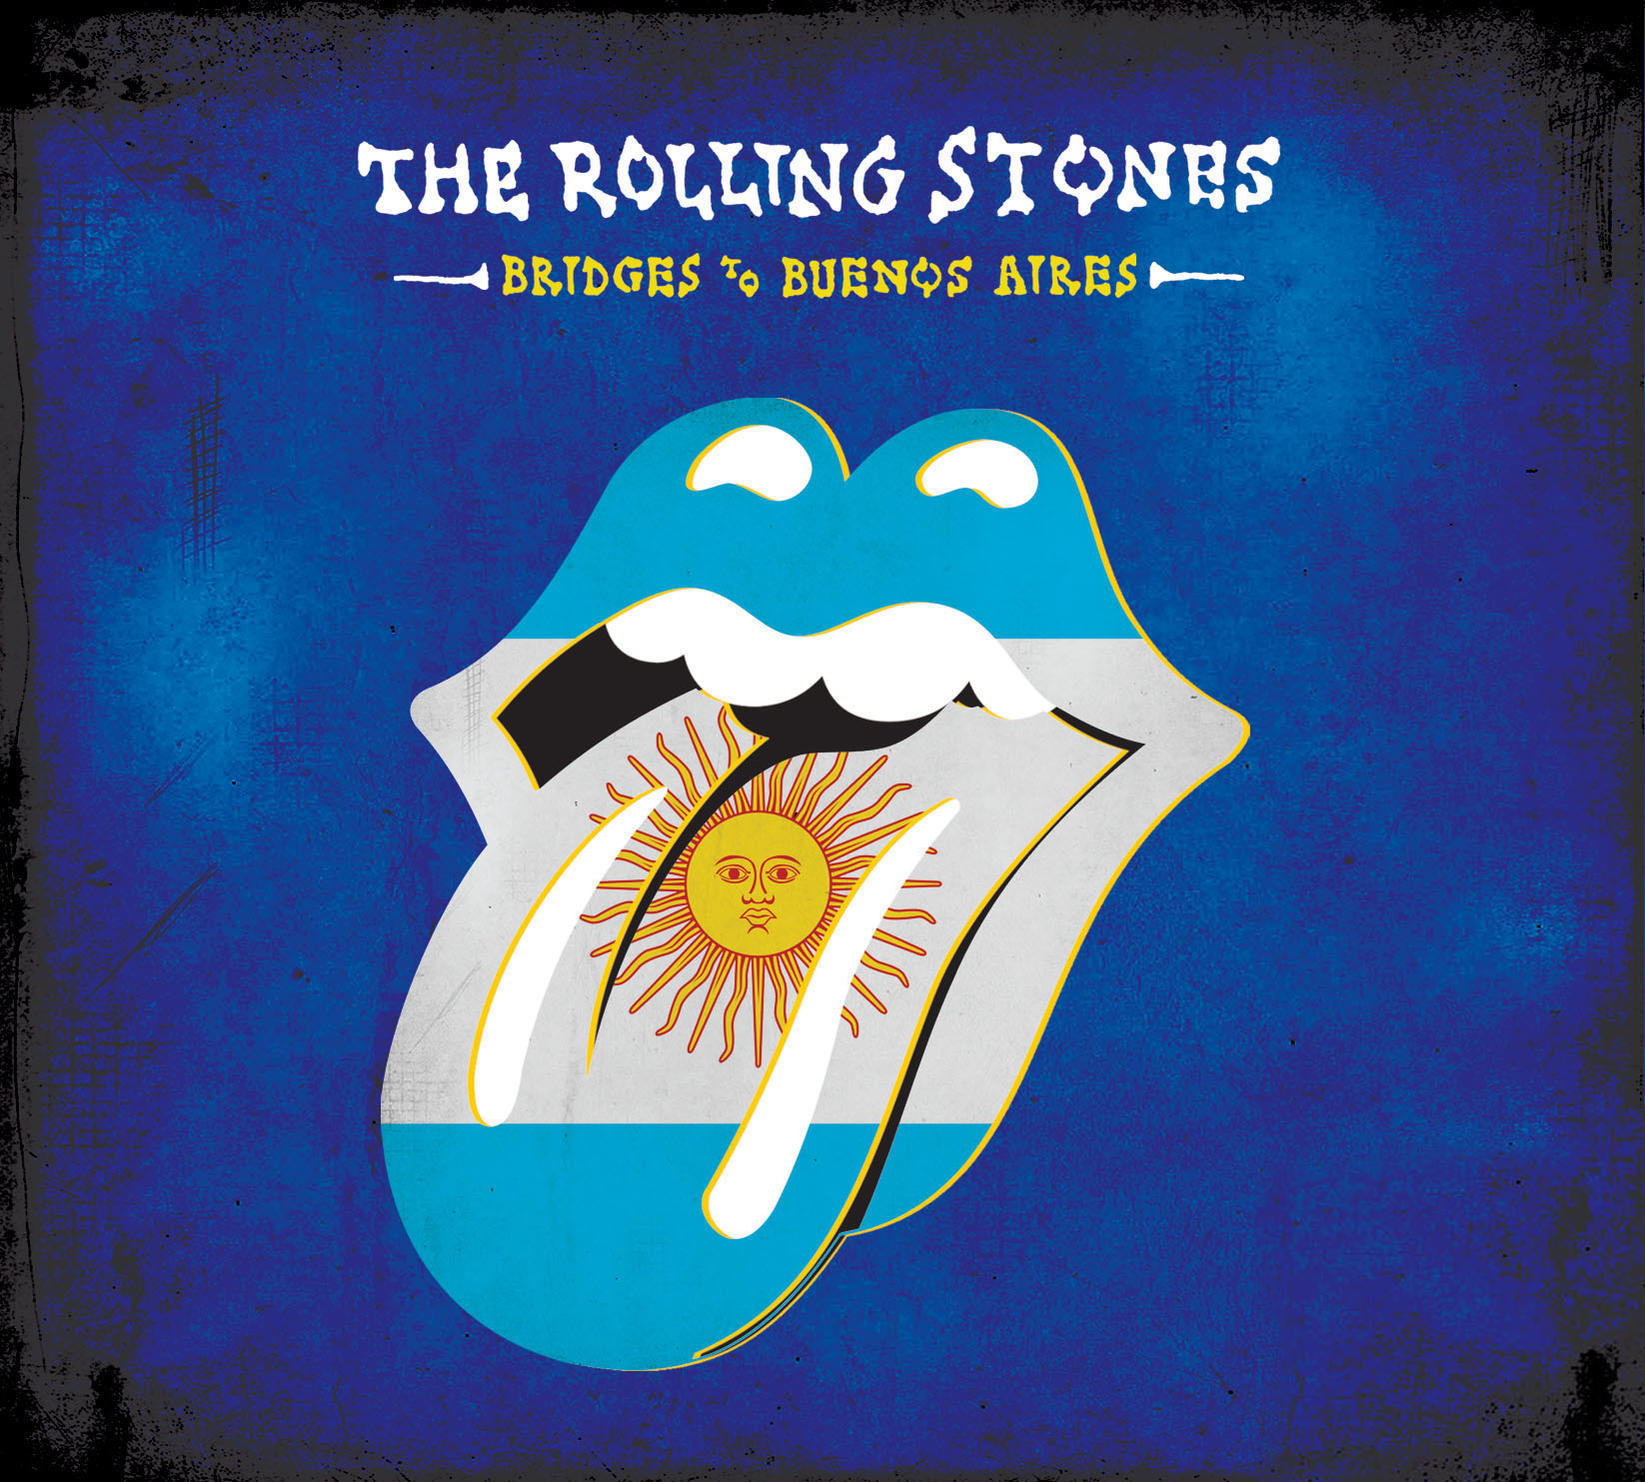 Bridges - - Buenos To Rolling The Stones (Vinyl) Aires